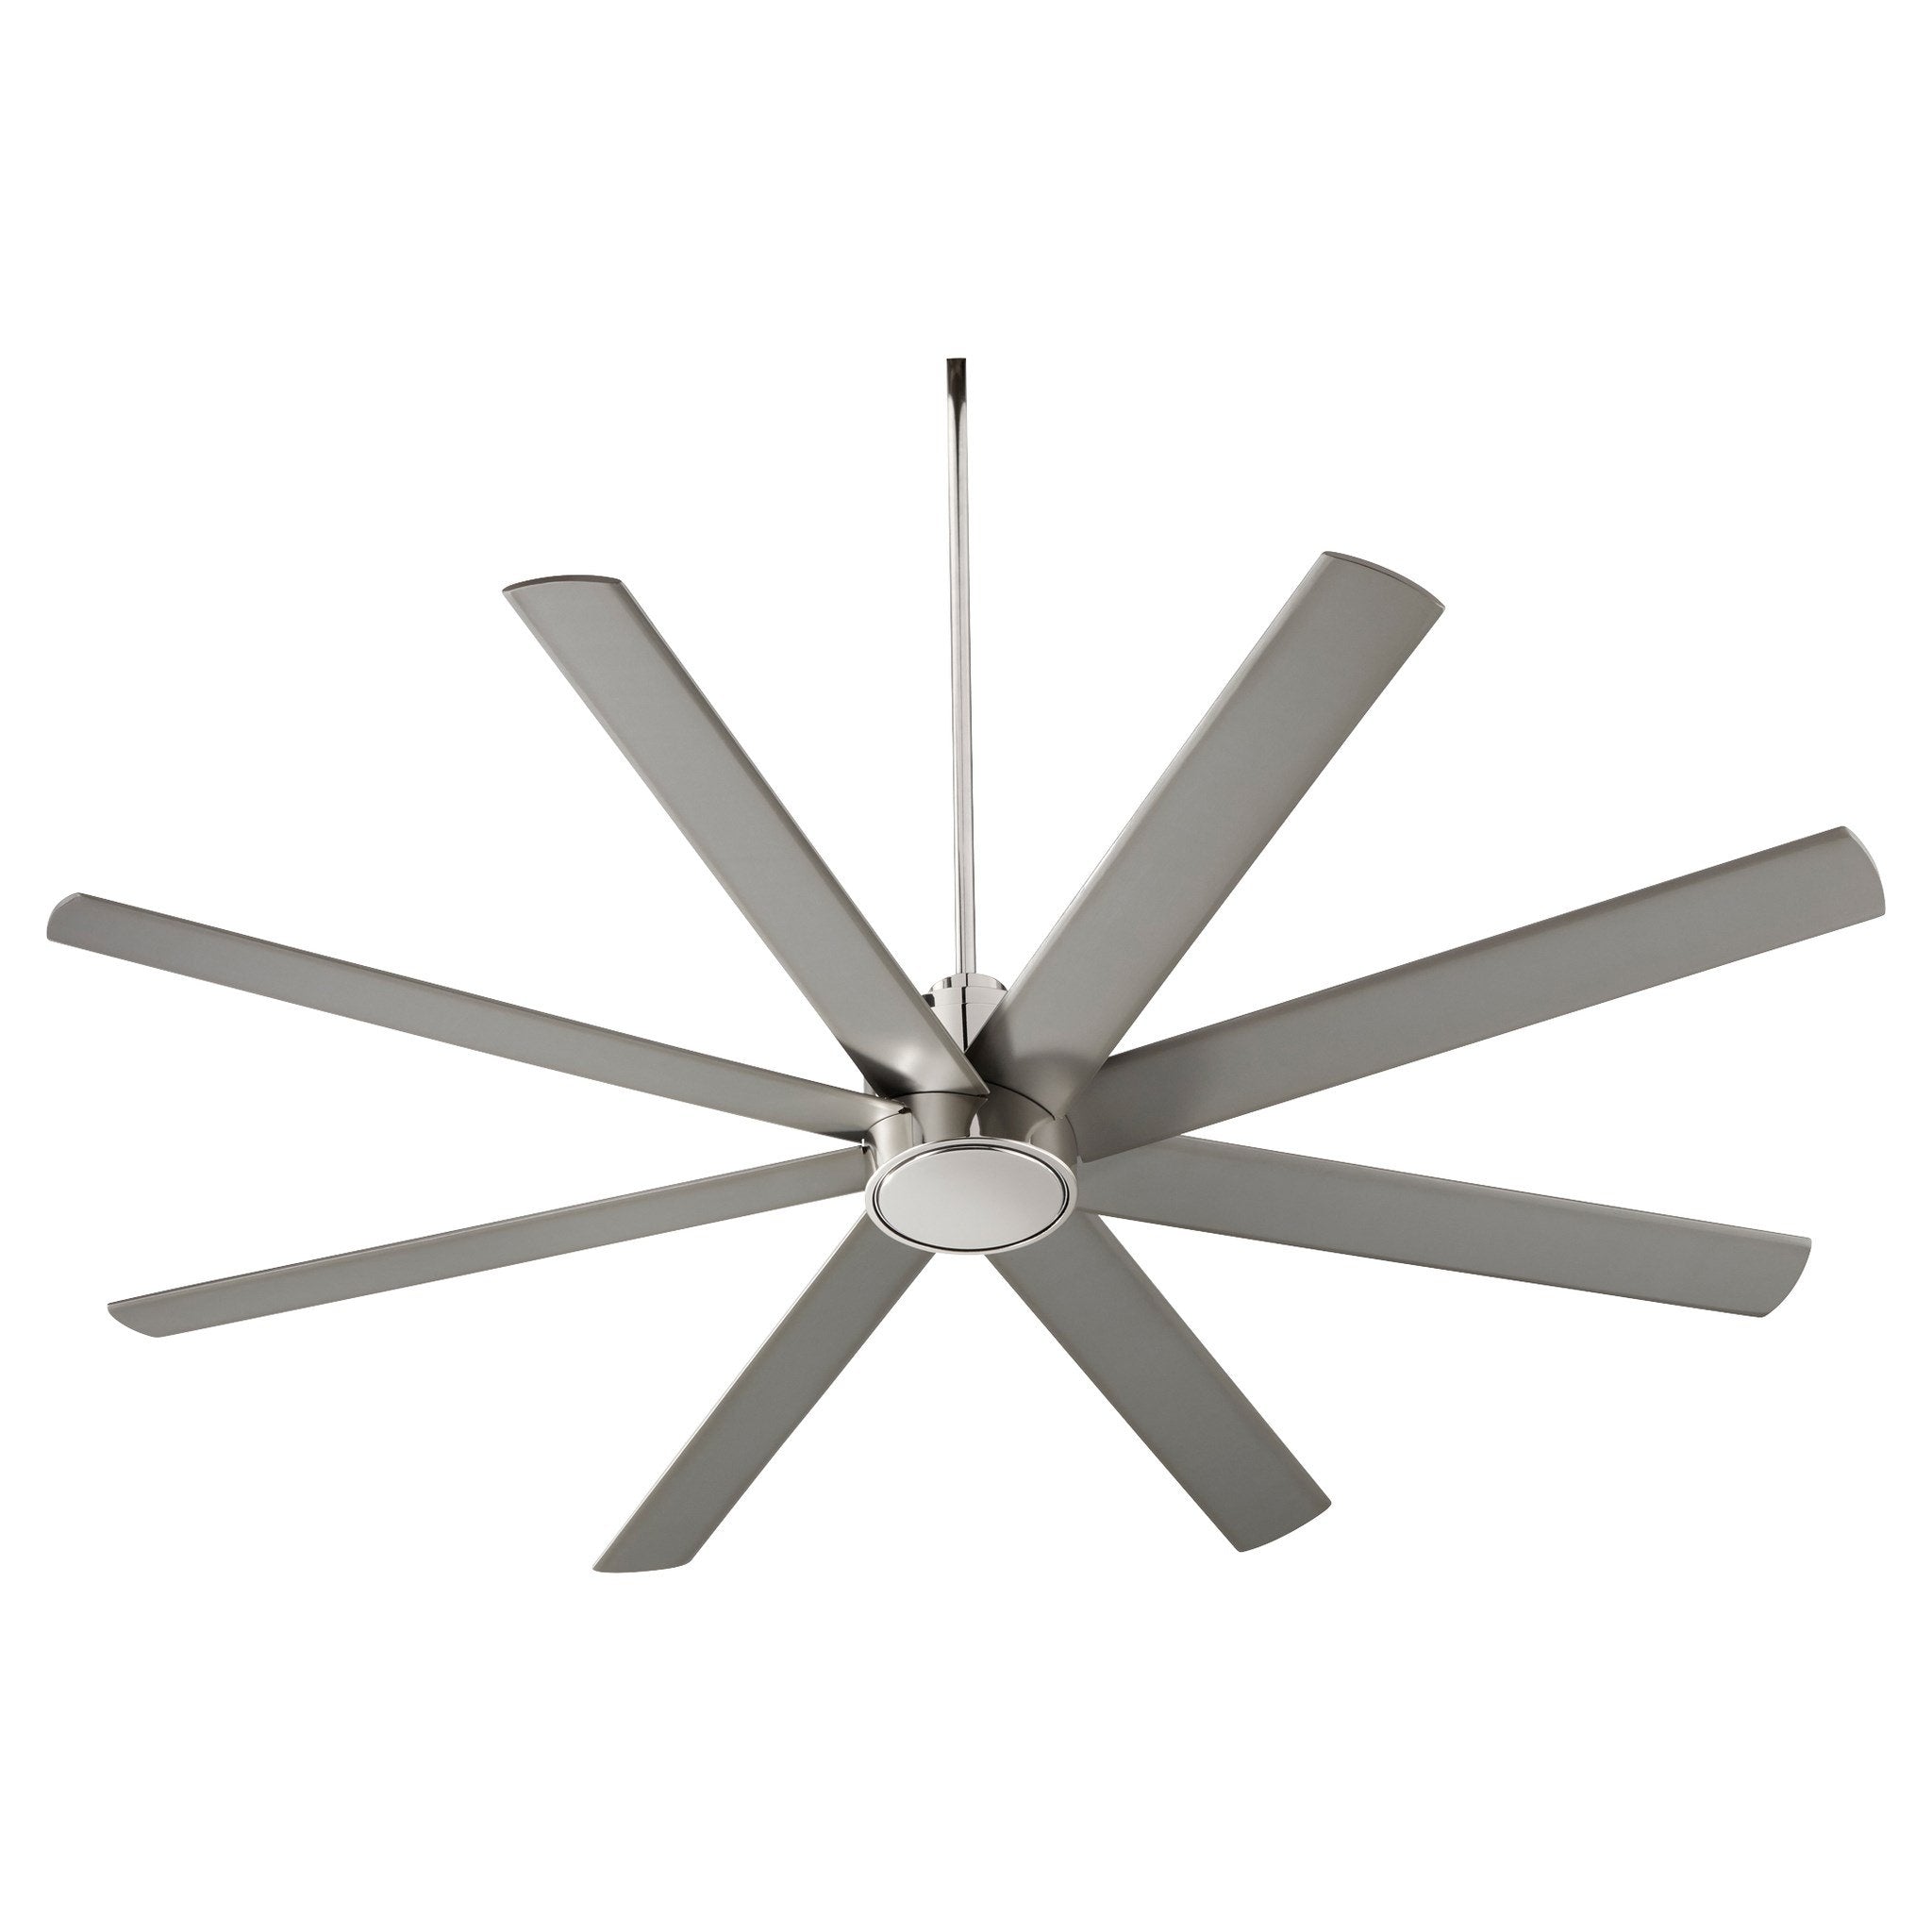 Oxygen Lighting 3-100-20 Cosmo Ceiling Fan 70 Inch 8 Blades - Polished Nickel